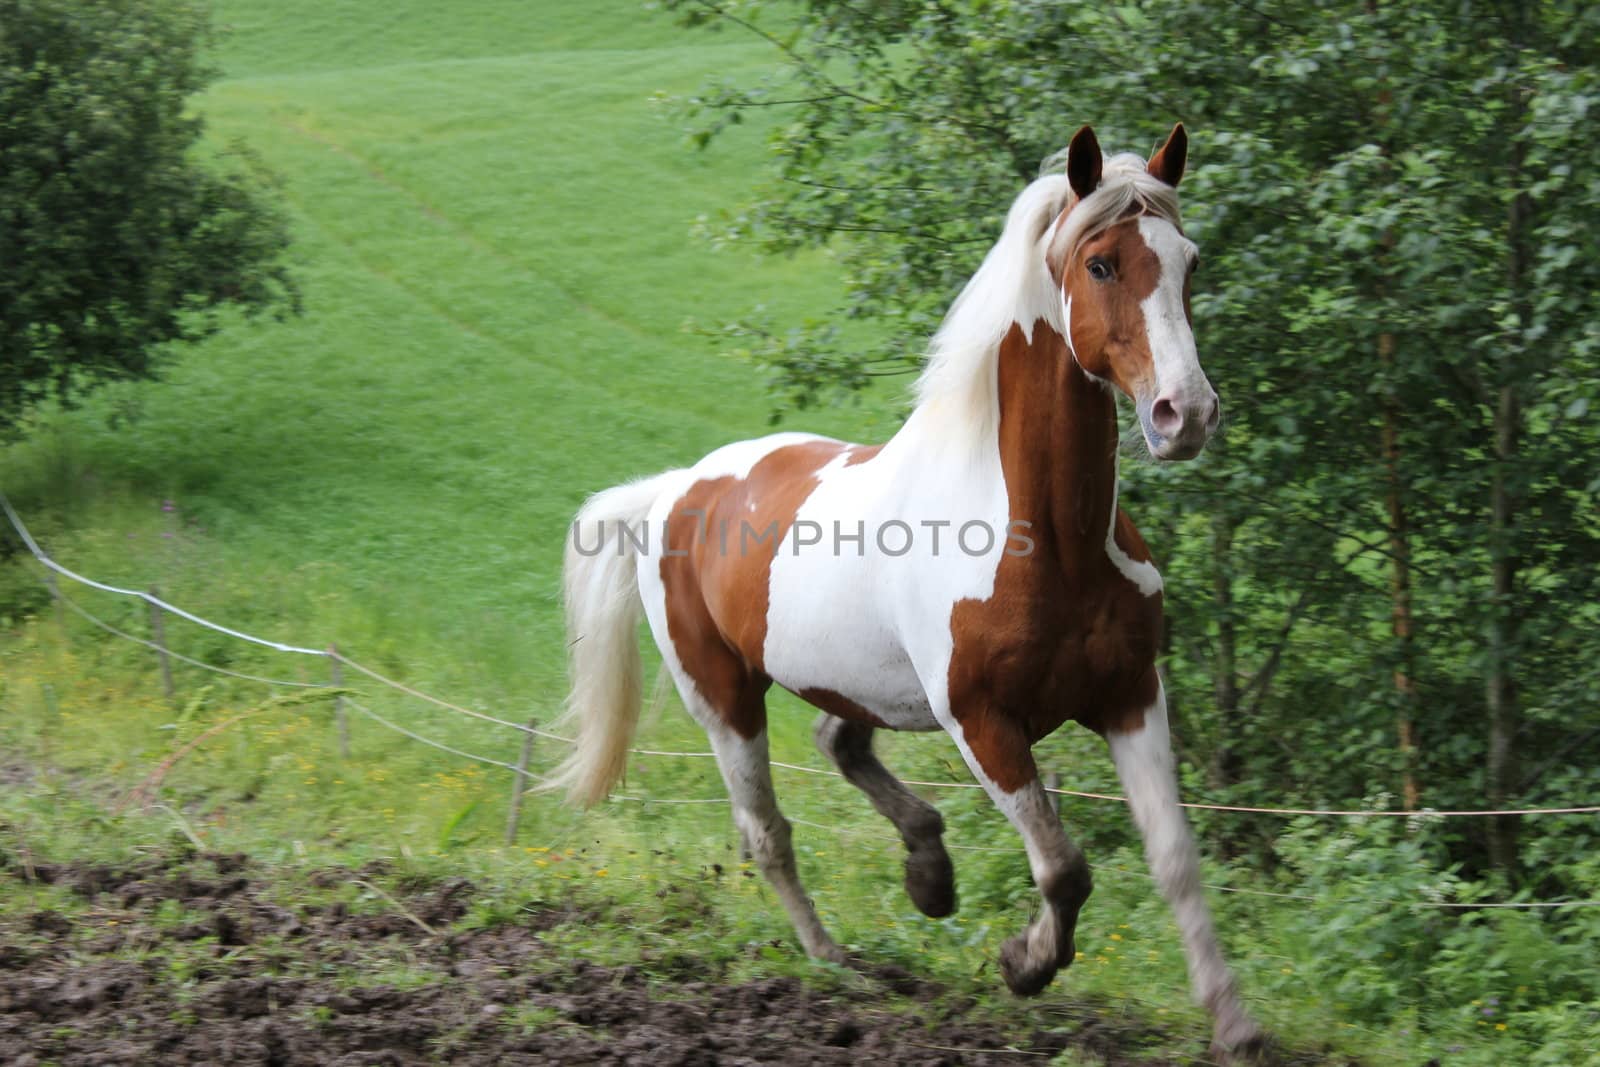 Running horse by Jannsel